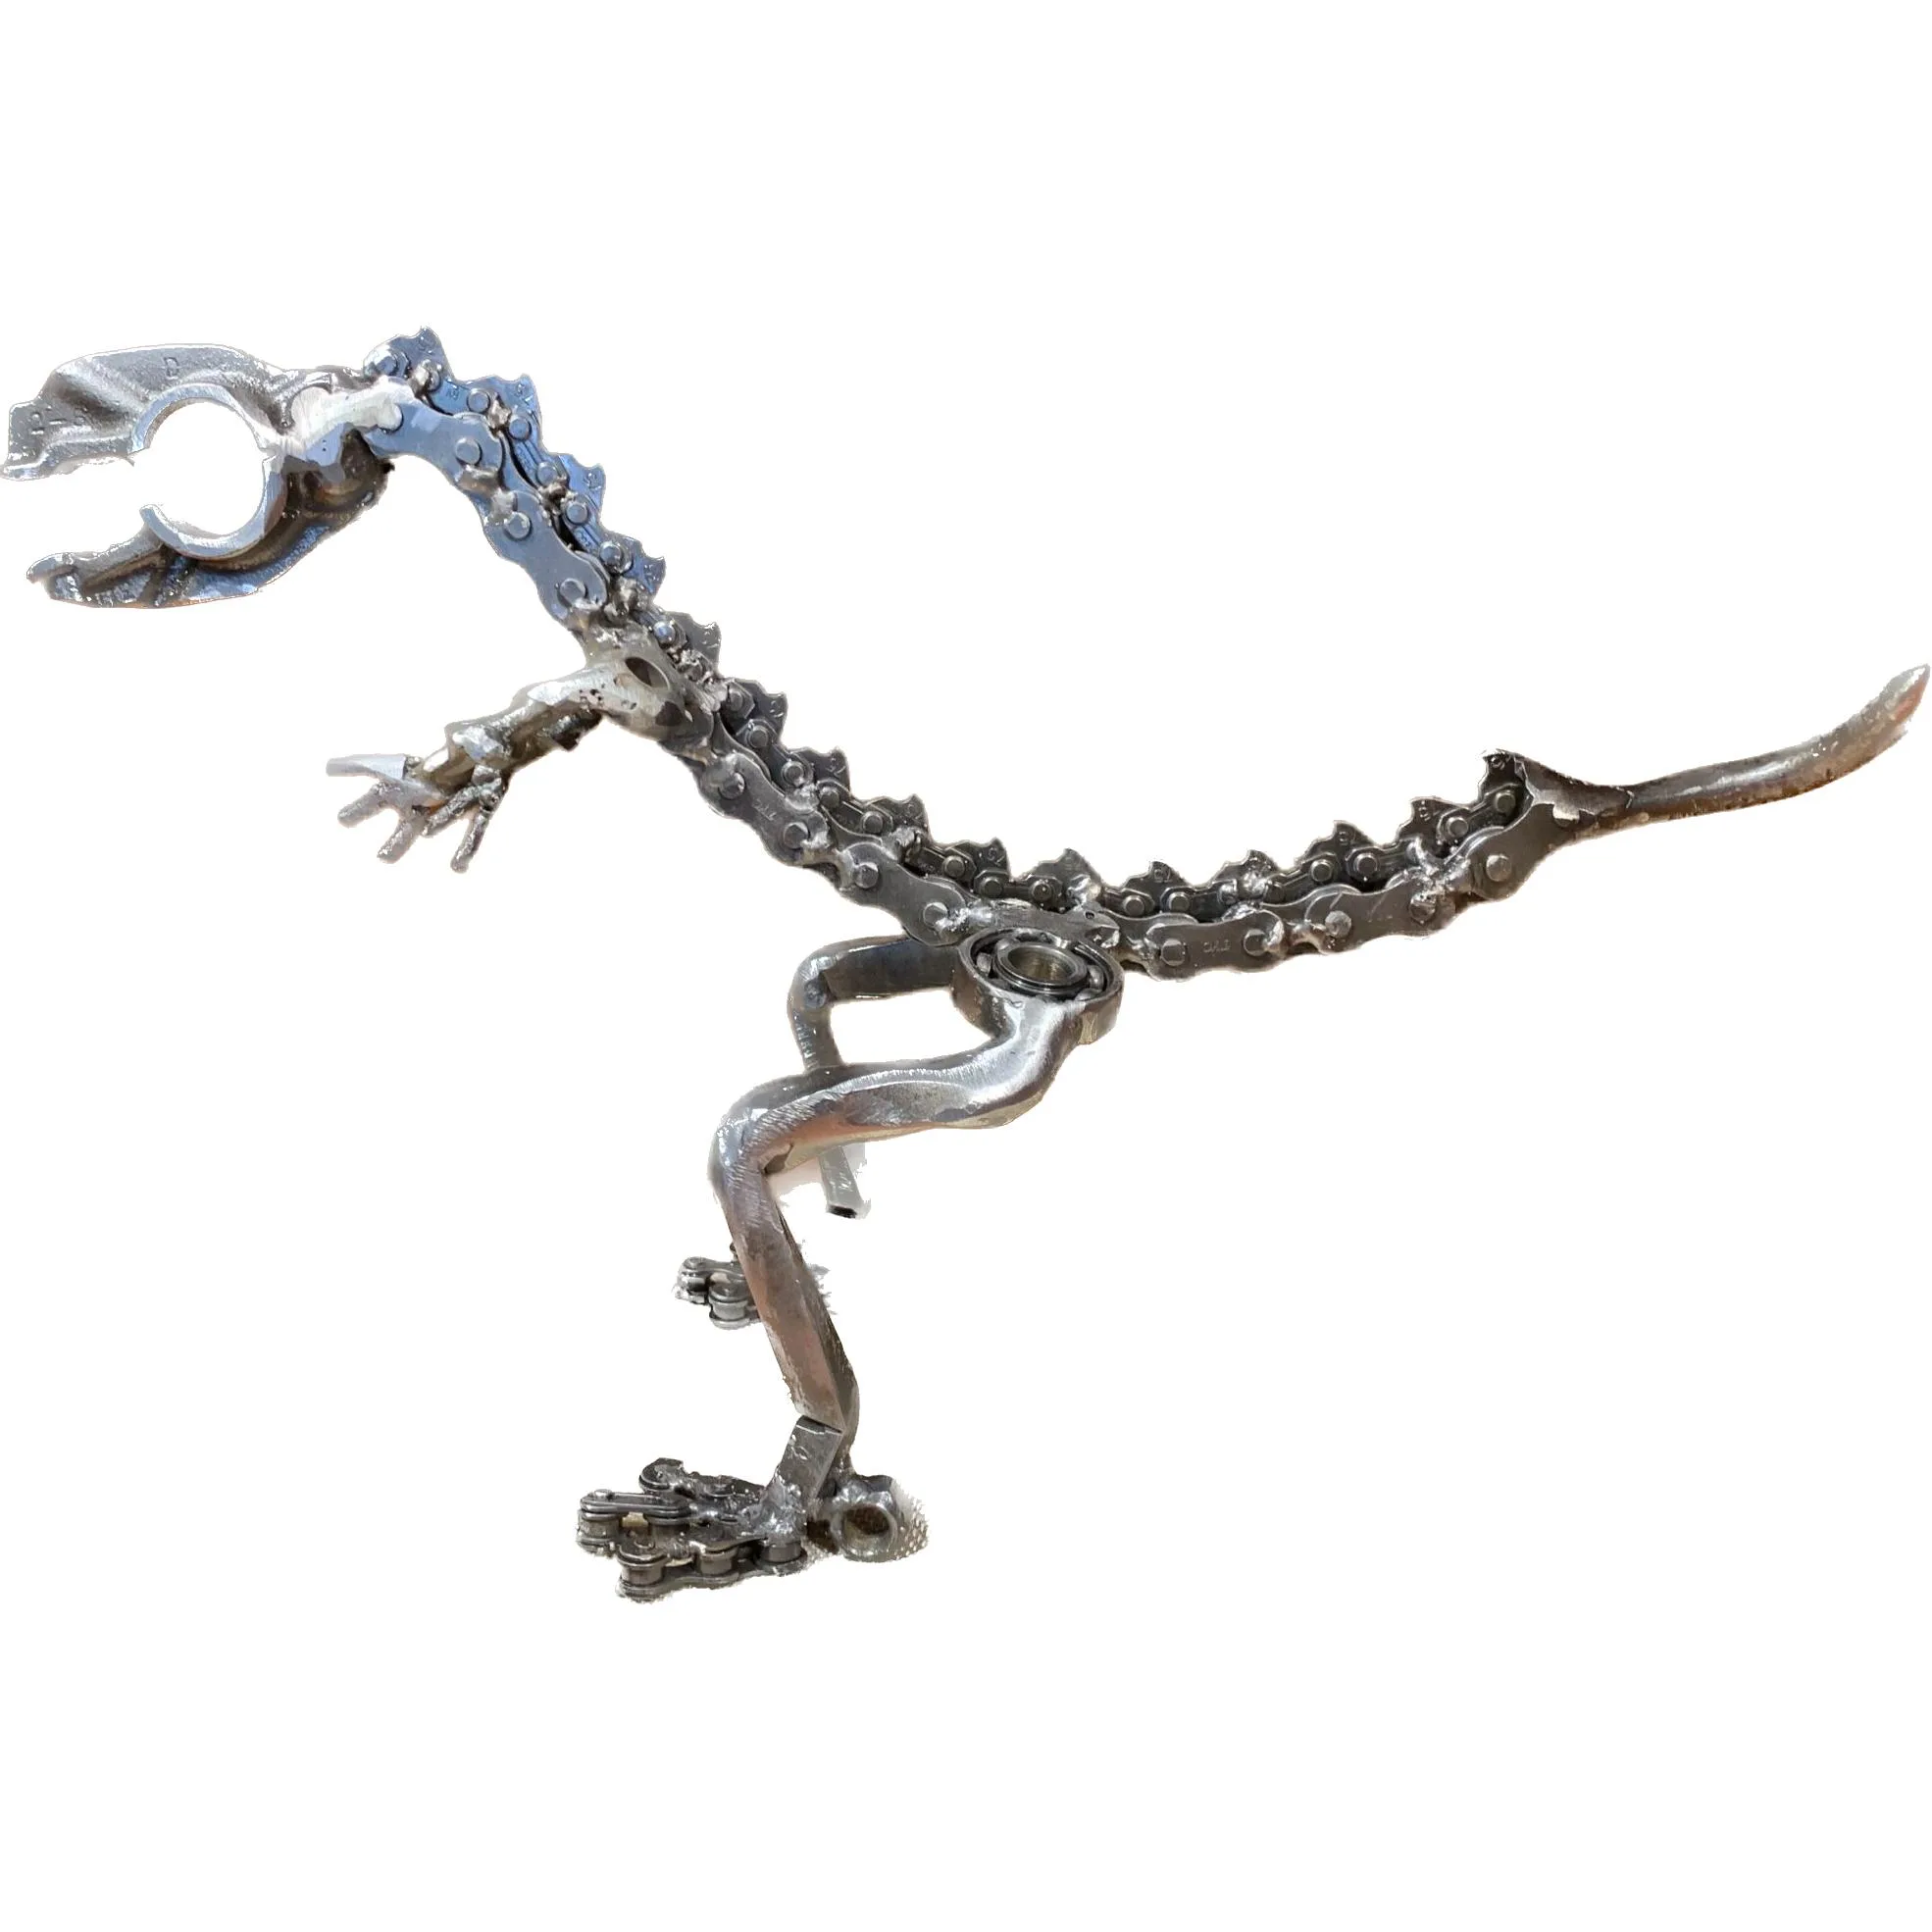 T-Rex sculpture  “Trex” Prehistoric Online